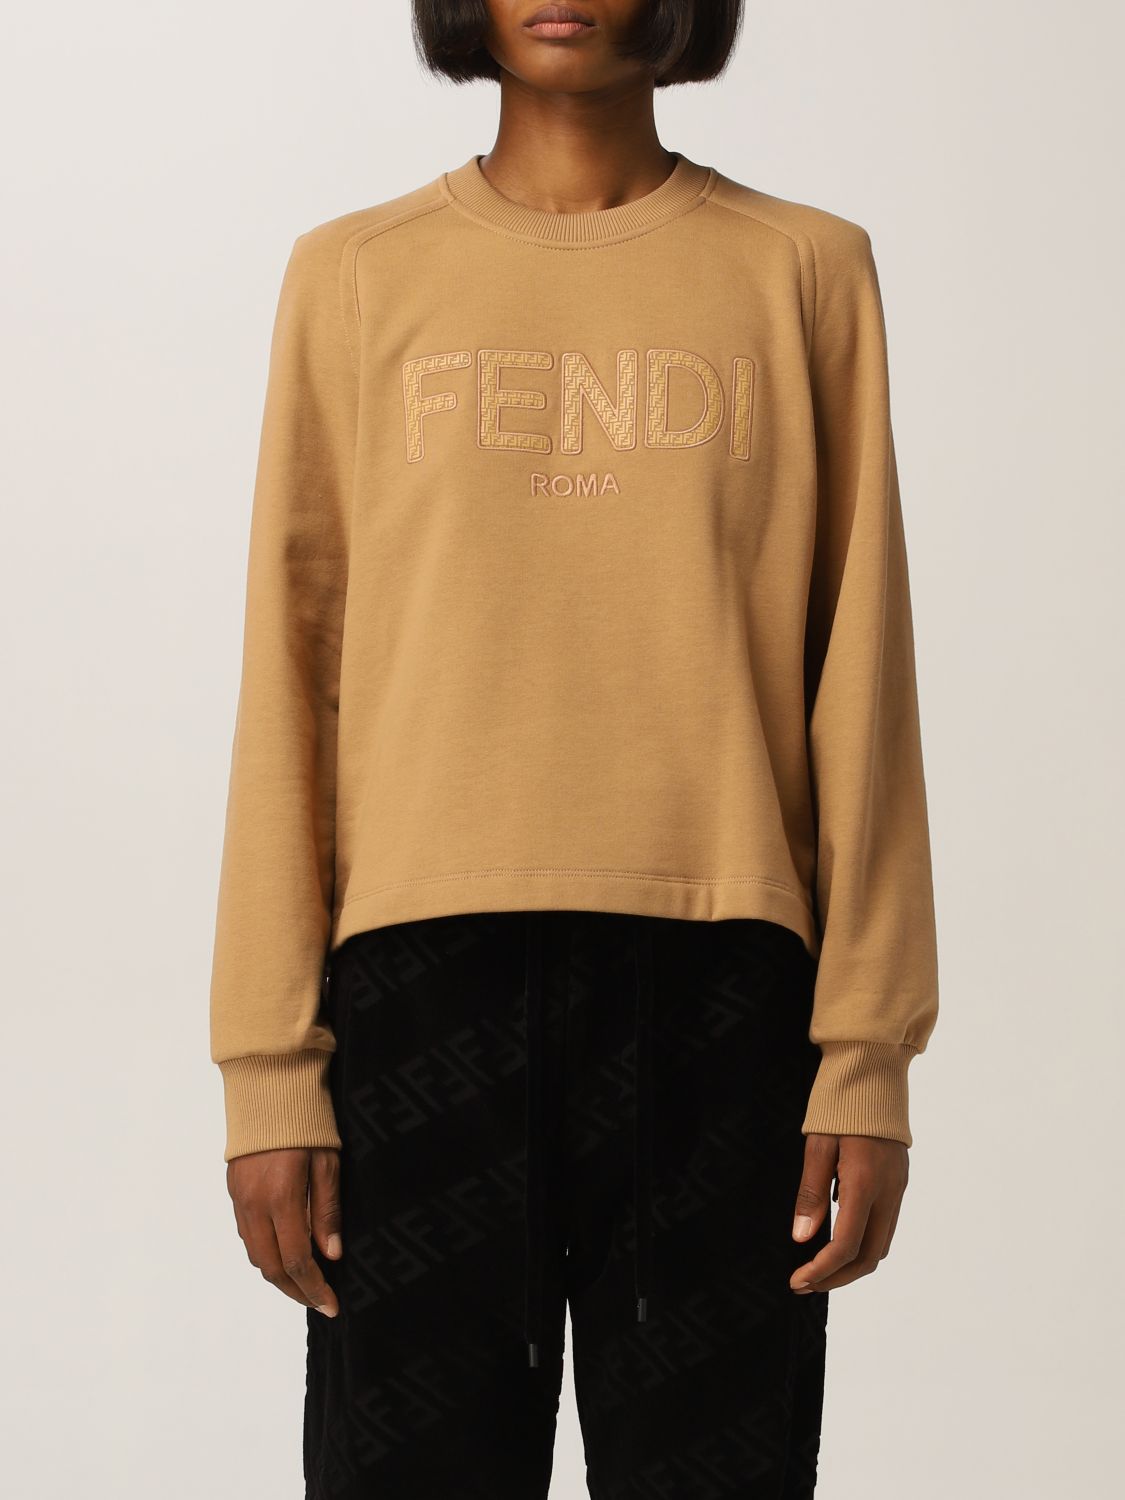 Fendi cotton jumper with logo